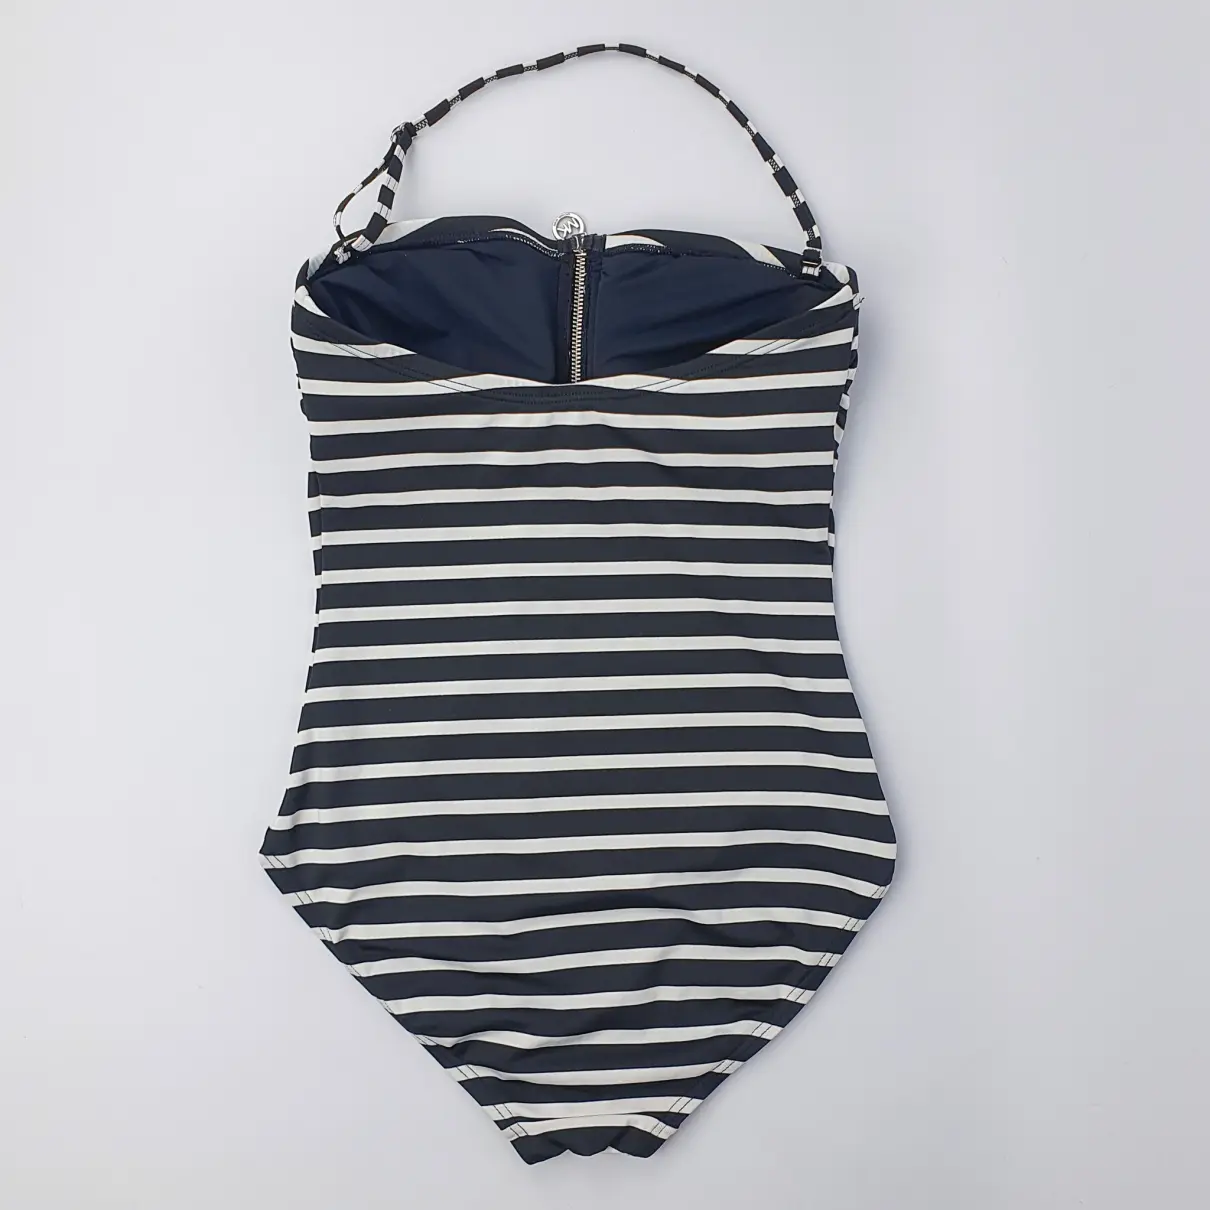 Buy Michael Kors One-piece swimsuit online